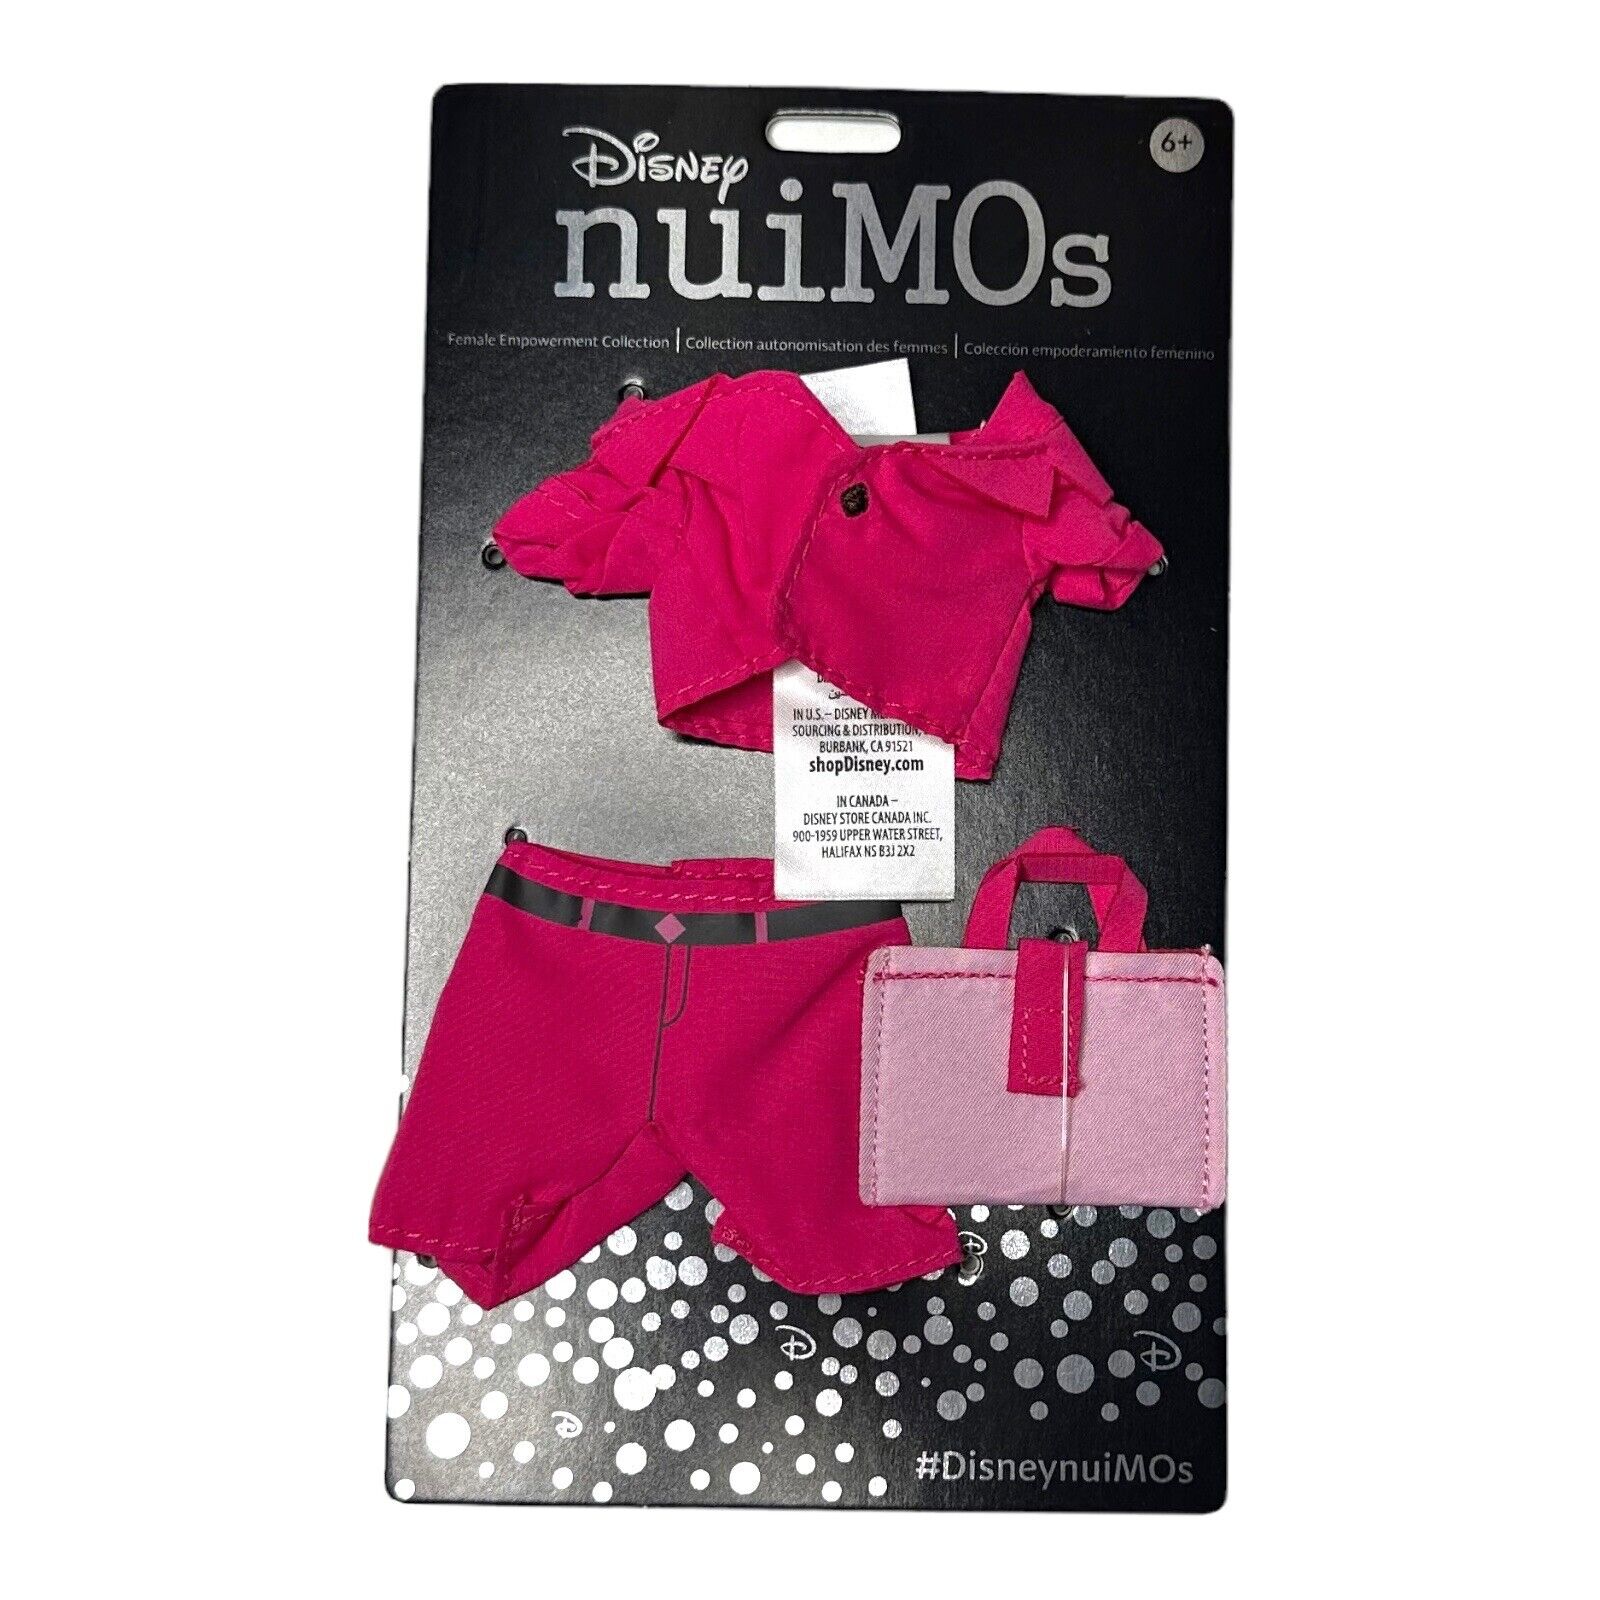 Disney nuiMOs Female Empowerment Collection Pink Suit & Laptop Bag Set